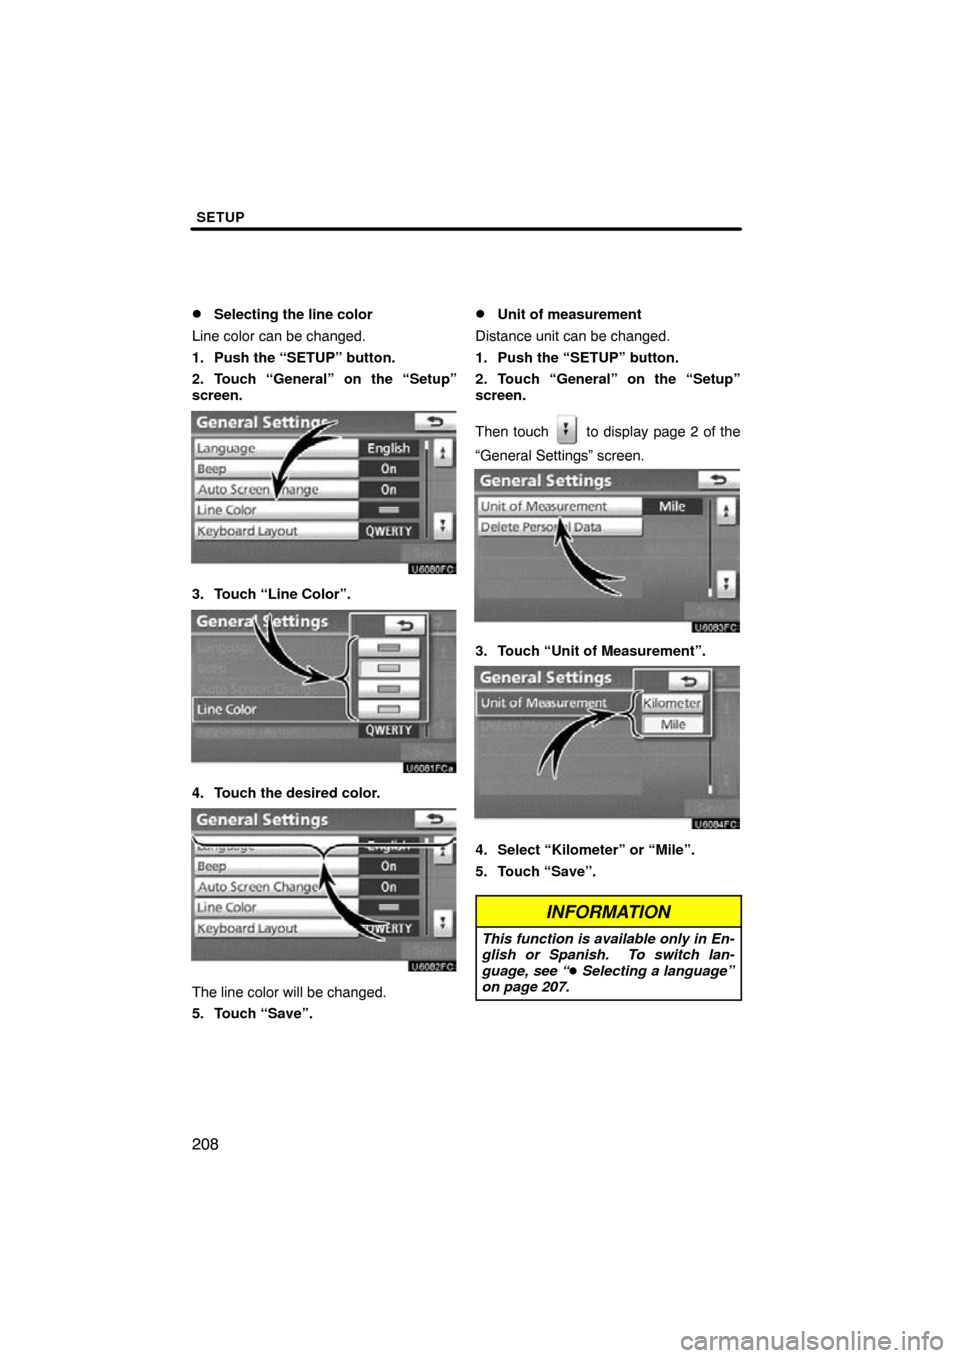 TOYOTA AVALON 2011 XX30 / 3.G Navigation Manual SETUP
208 
Selecting the line color
Line color can be changed.
1. Push the “SETUP” button.
2. Touch “General” on the “Setup”
screen.
3. Touch “Line Color”.
4. Touch the desired color.